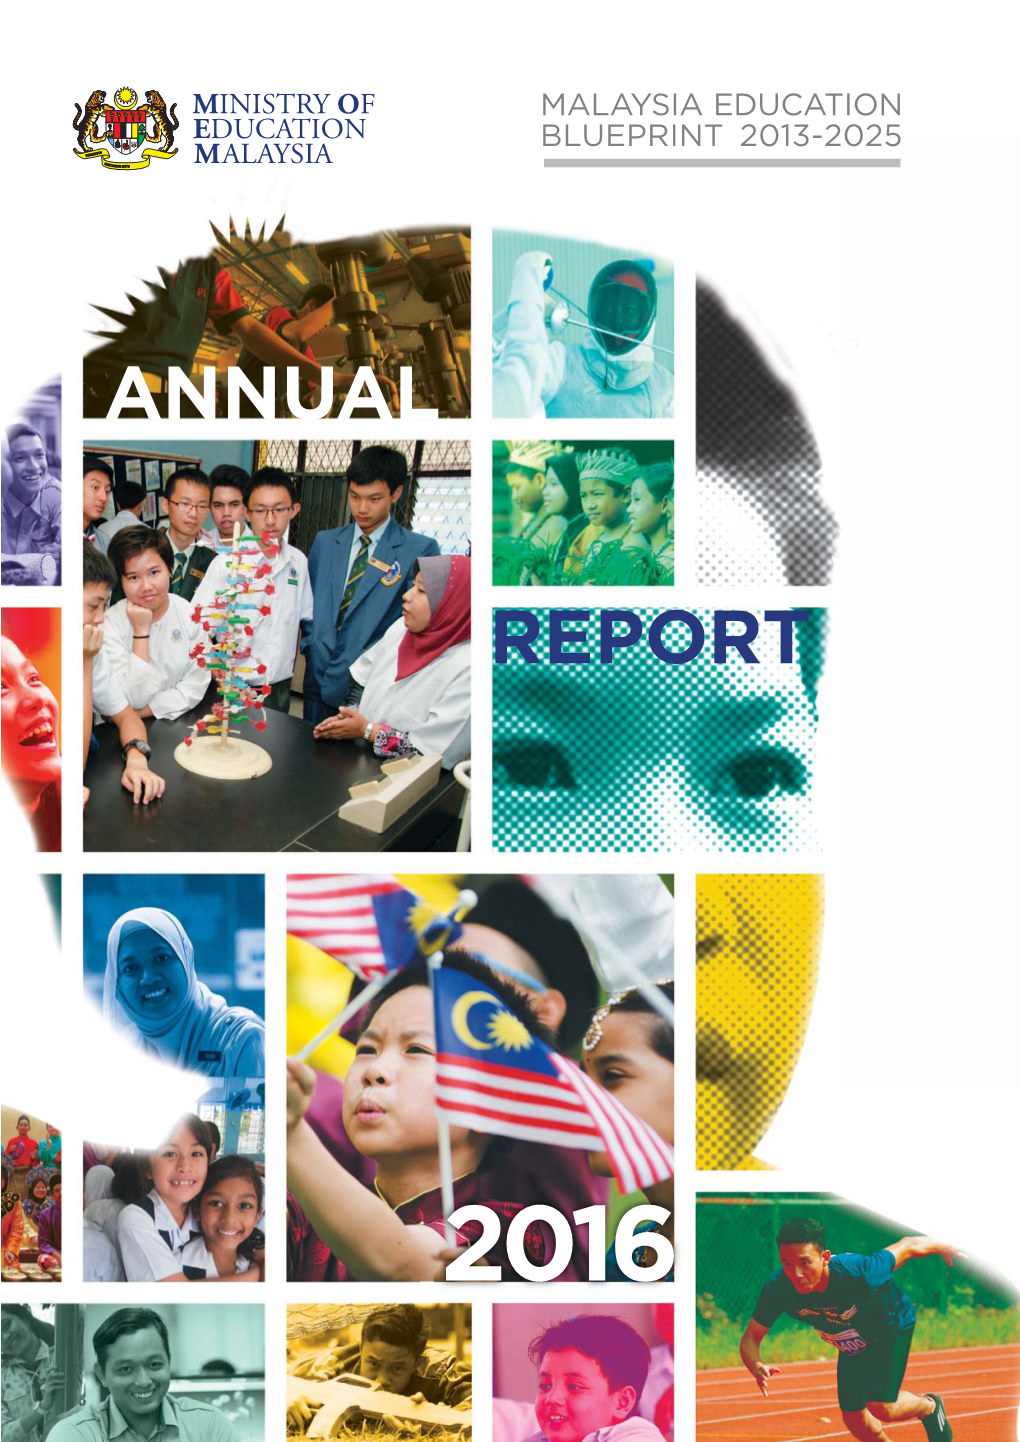 2016 Annual Report | Malaysia Education Blueprint 2013-2025